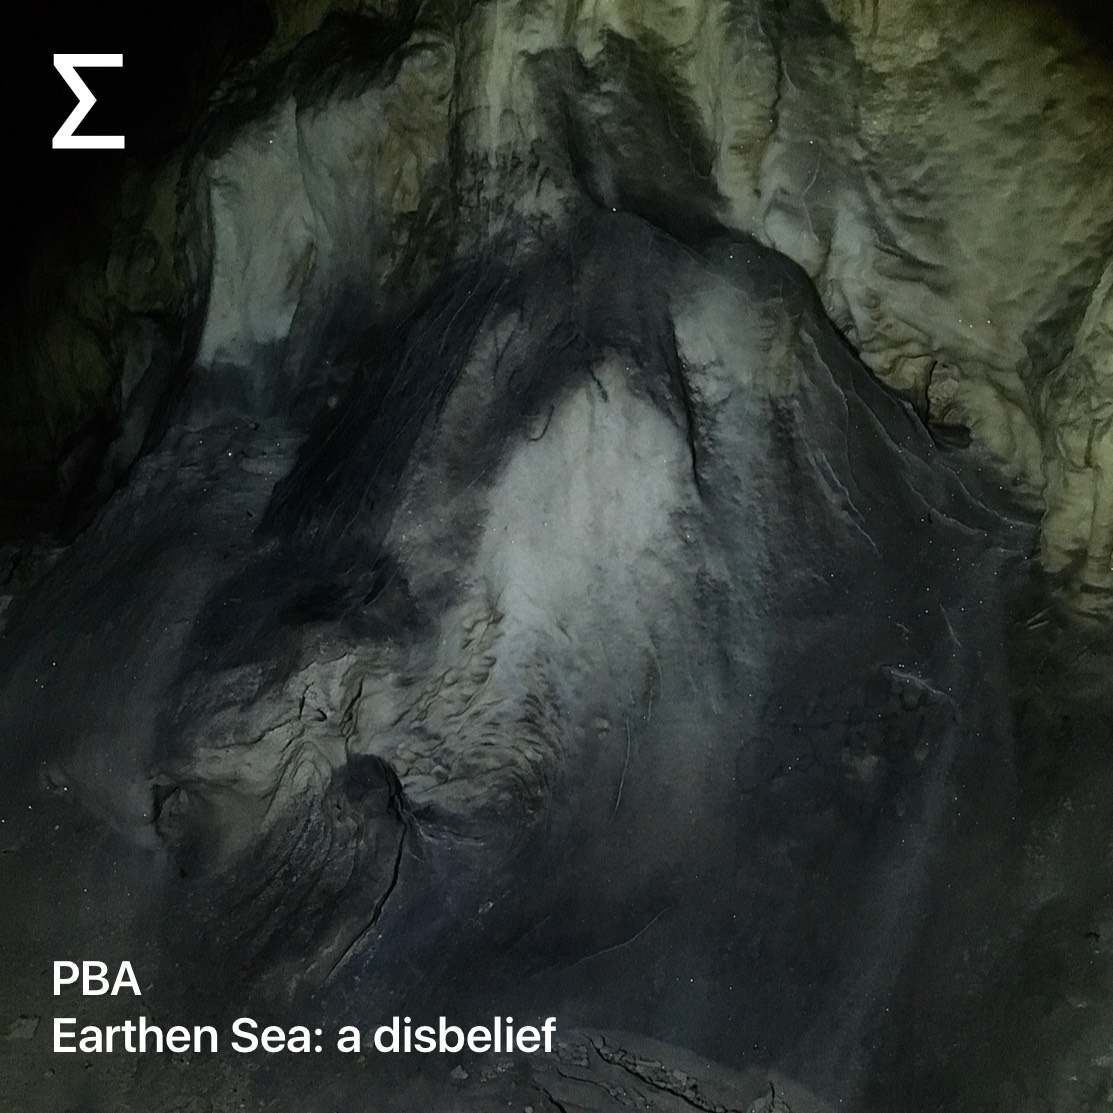 PBA – Earthen Sea: a disbelief